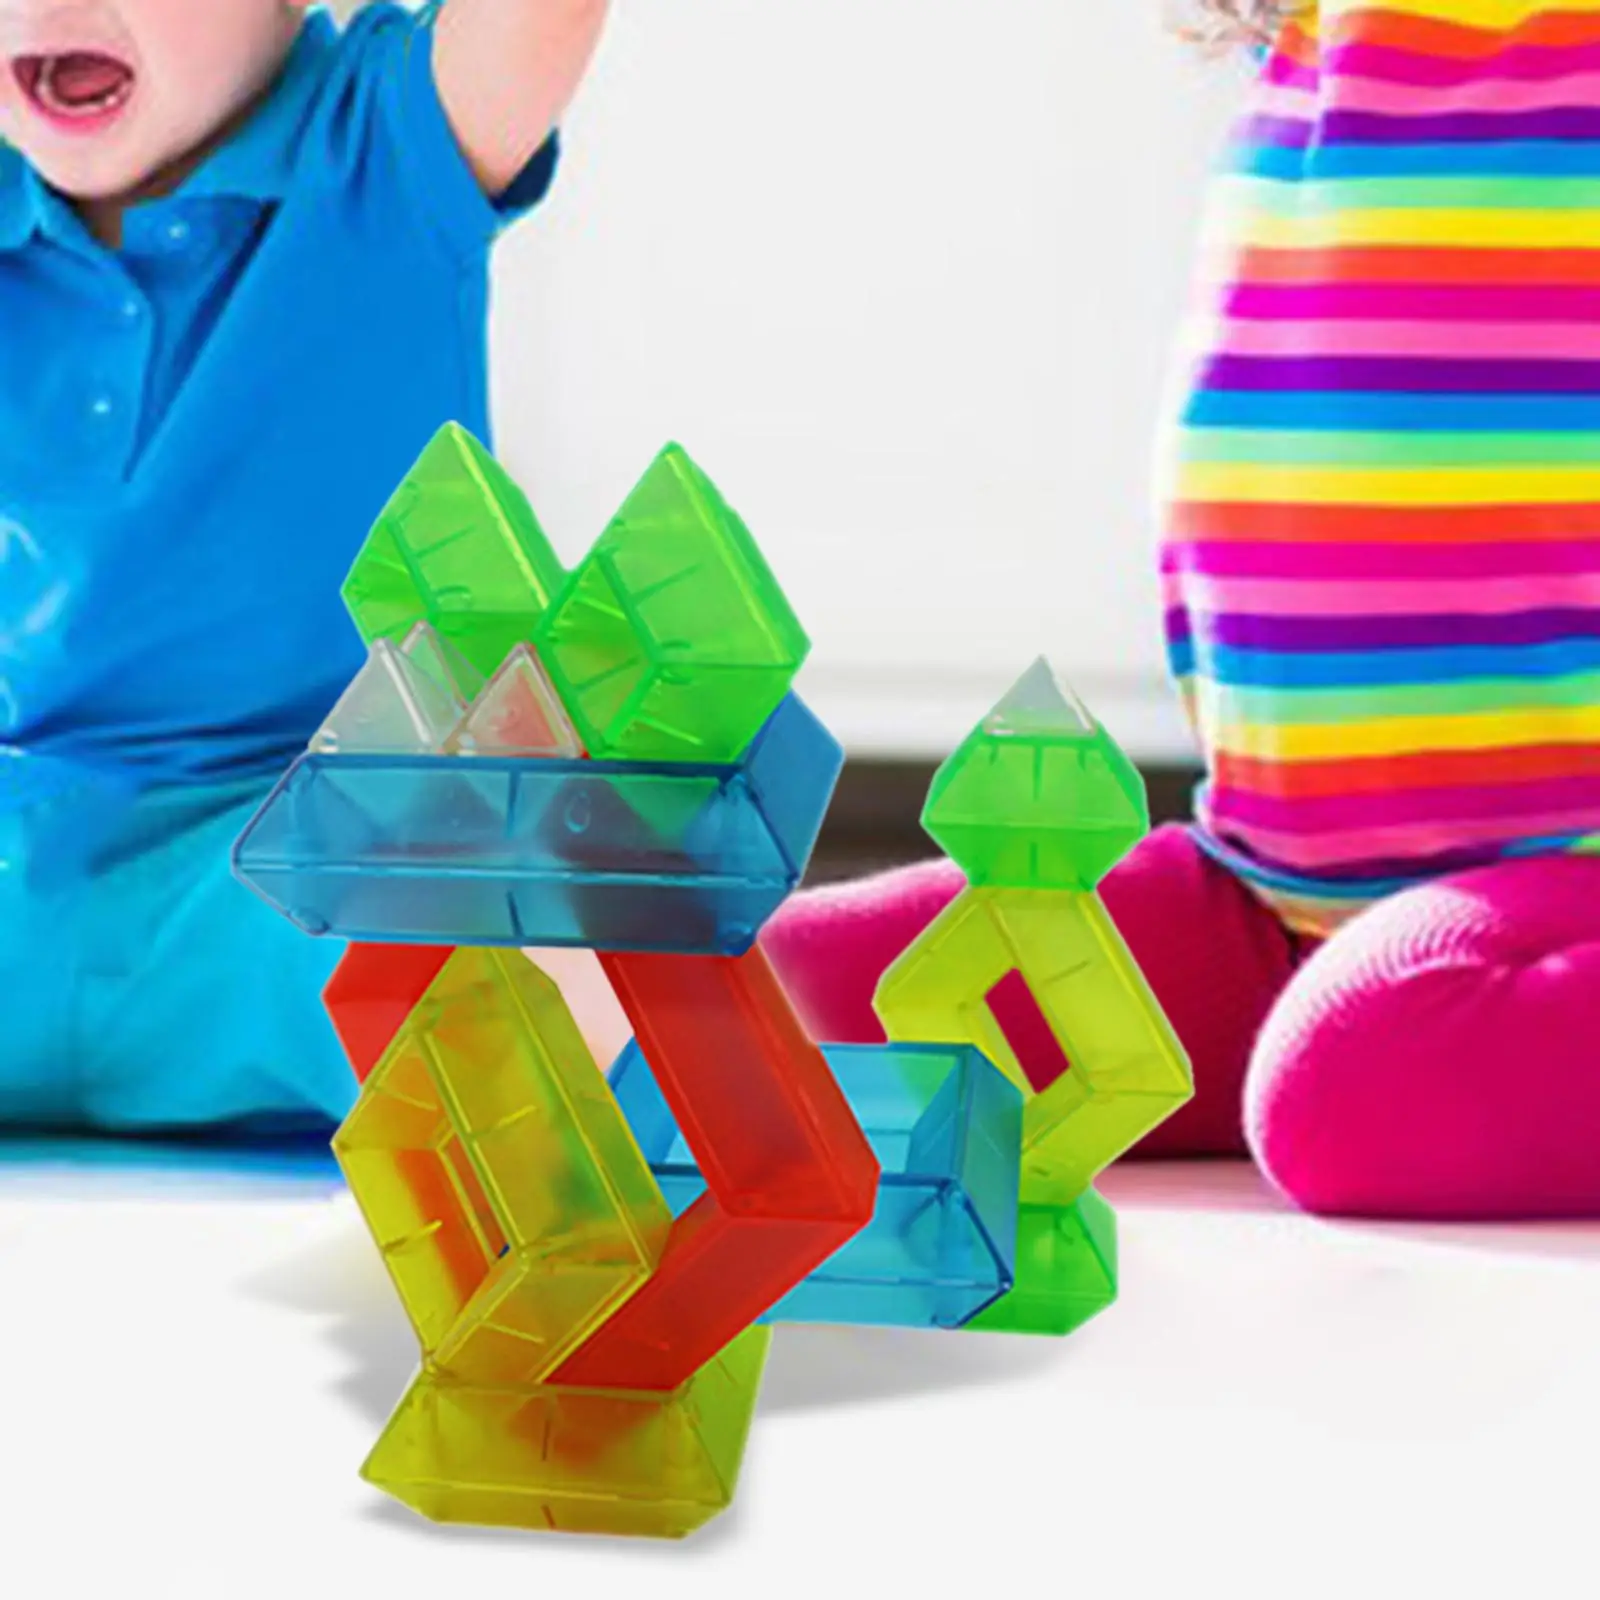 Toys Stacking Hand Eye Coordination imagination Balancing Montessori Wisdom Pyramids for Toddler